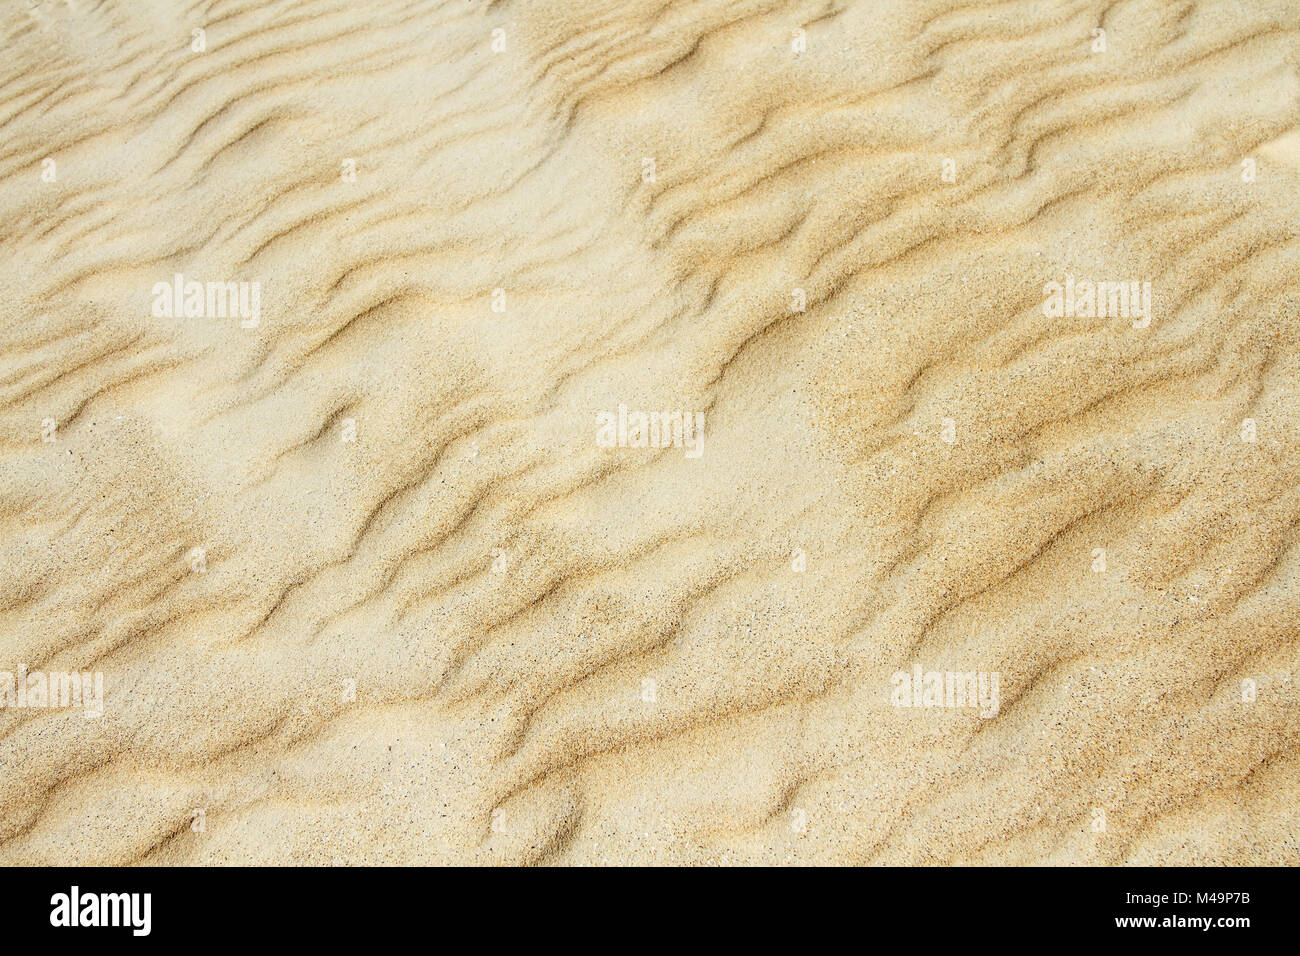 Yellow sand dune texture close up Stock Photo